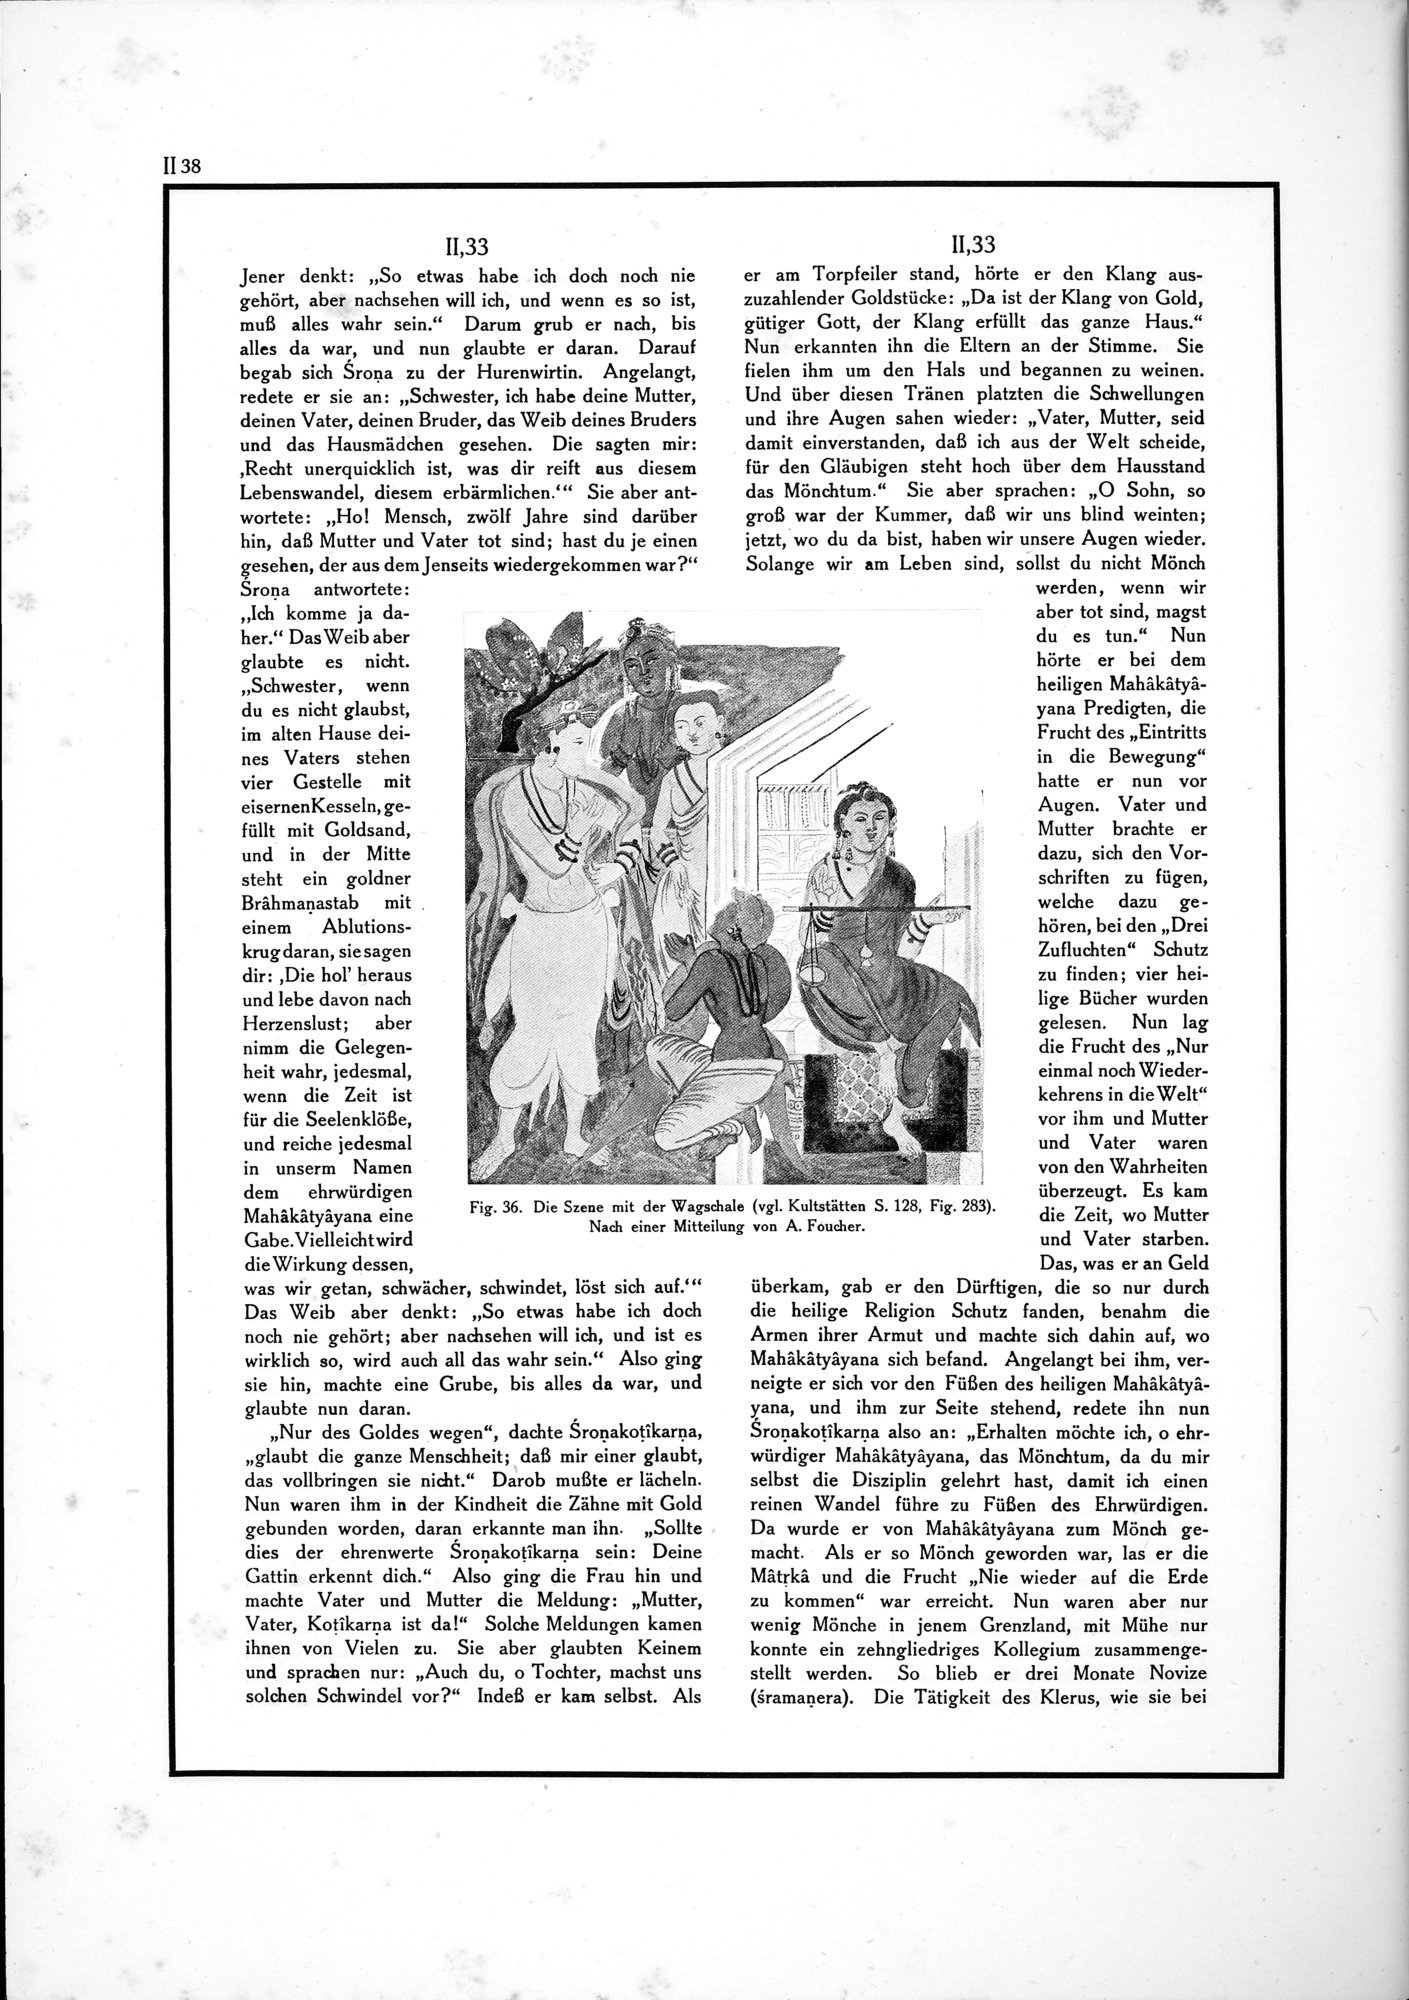 Alt-Kutscha : vol.1 / Page 144 (Grayscale High Resolution Image)